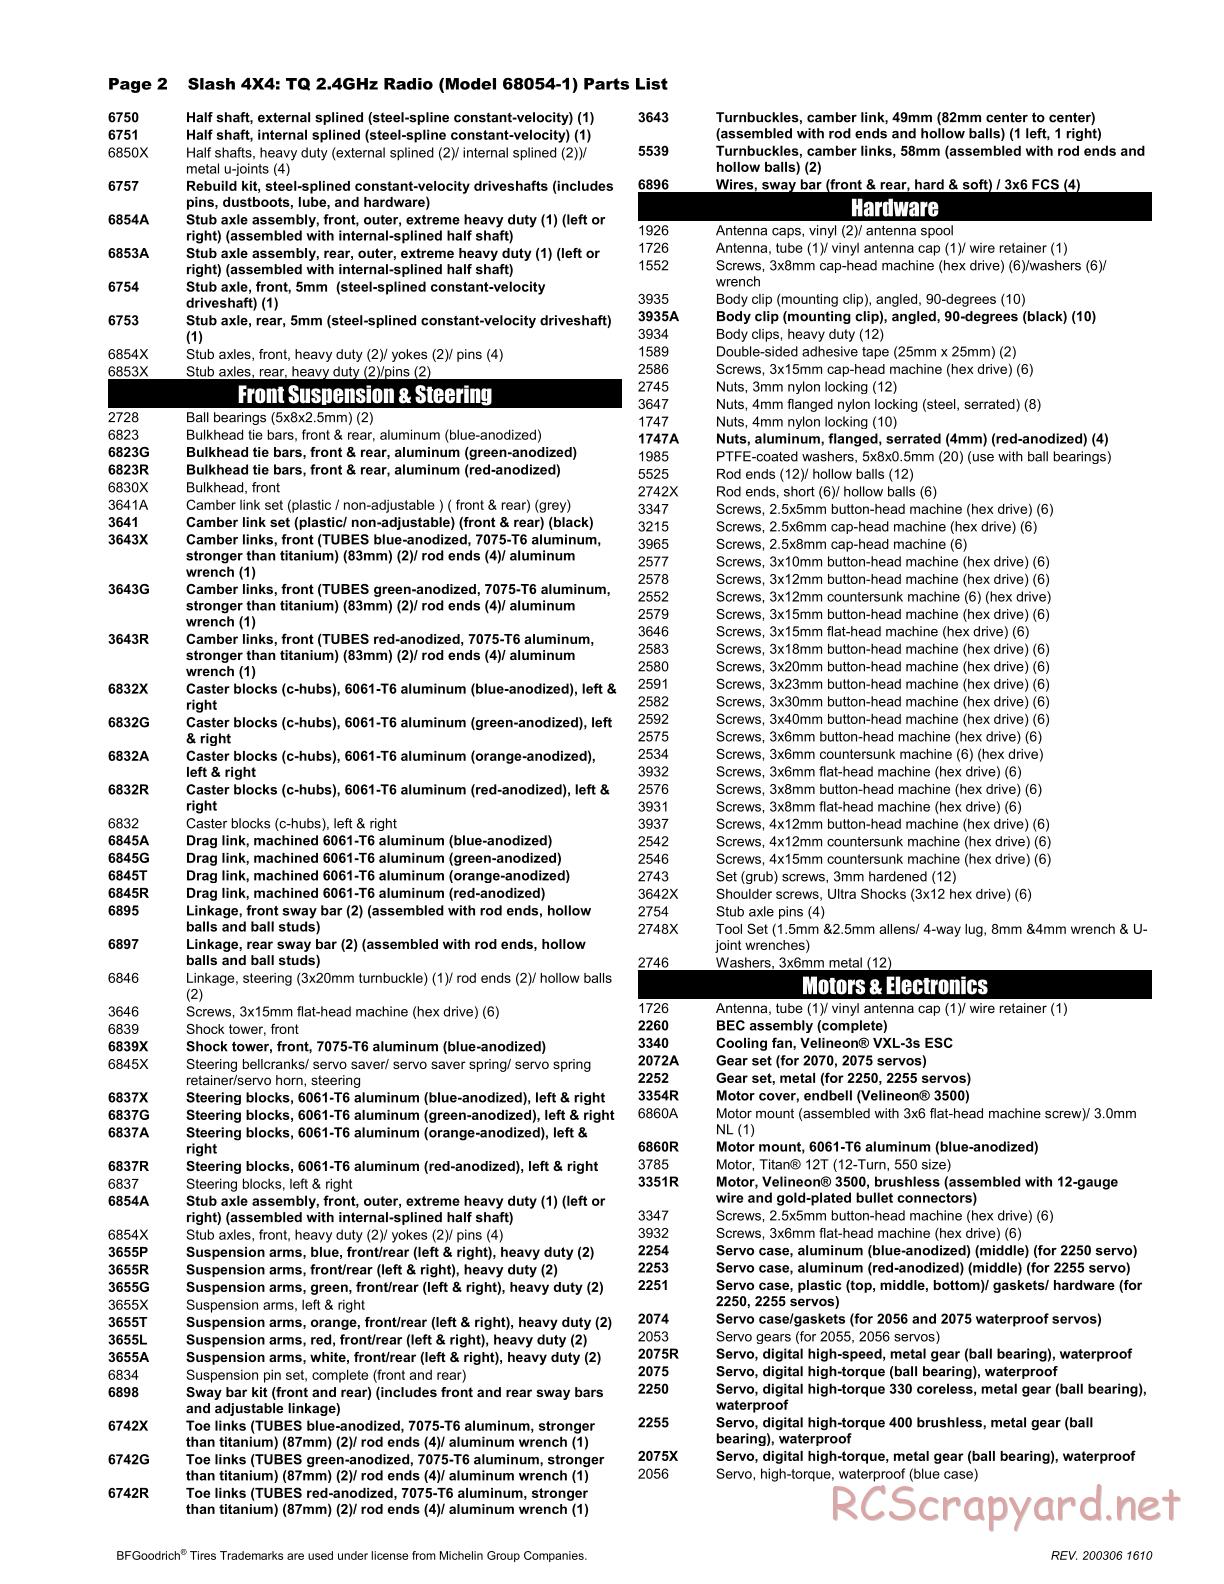 Traxxas - Slash 4x4 Brushed - Parts List - Page 2